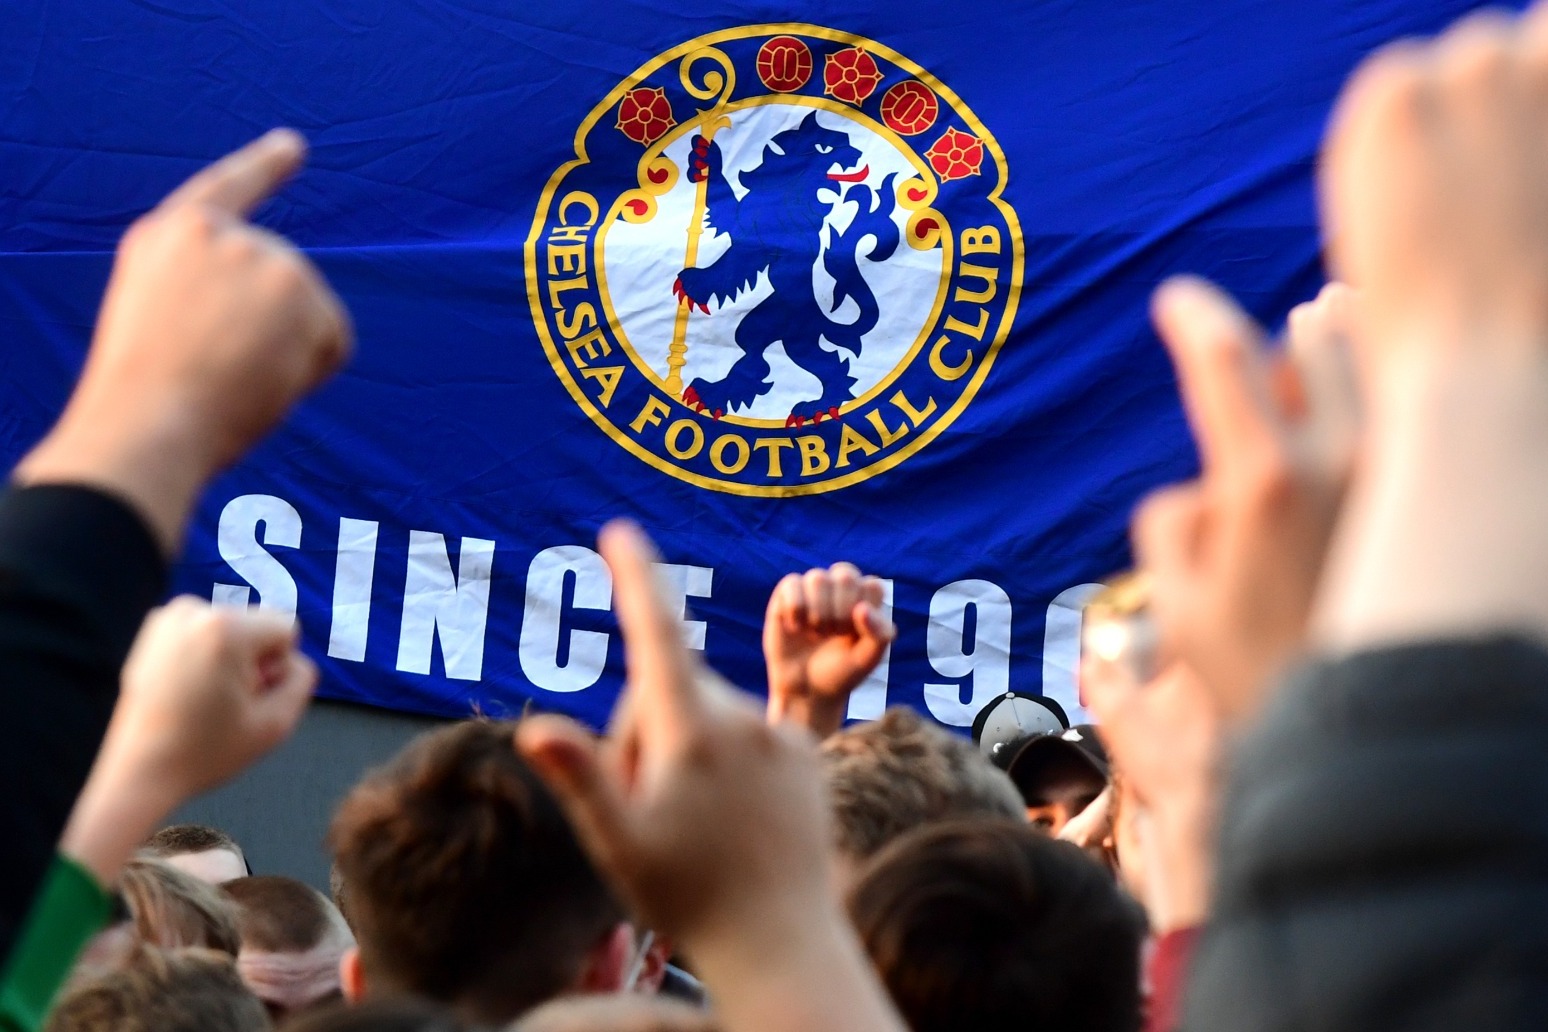 April deadline set for final Chelsea bids